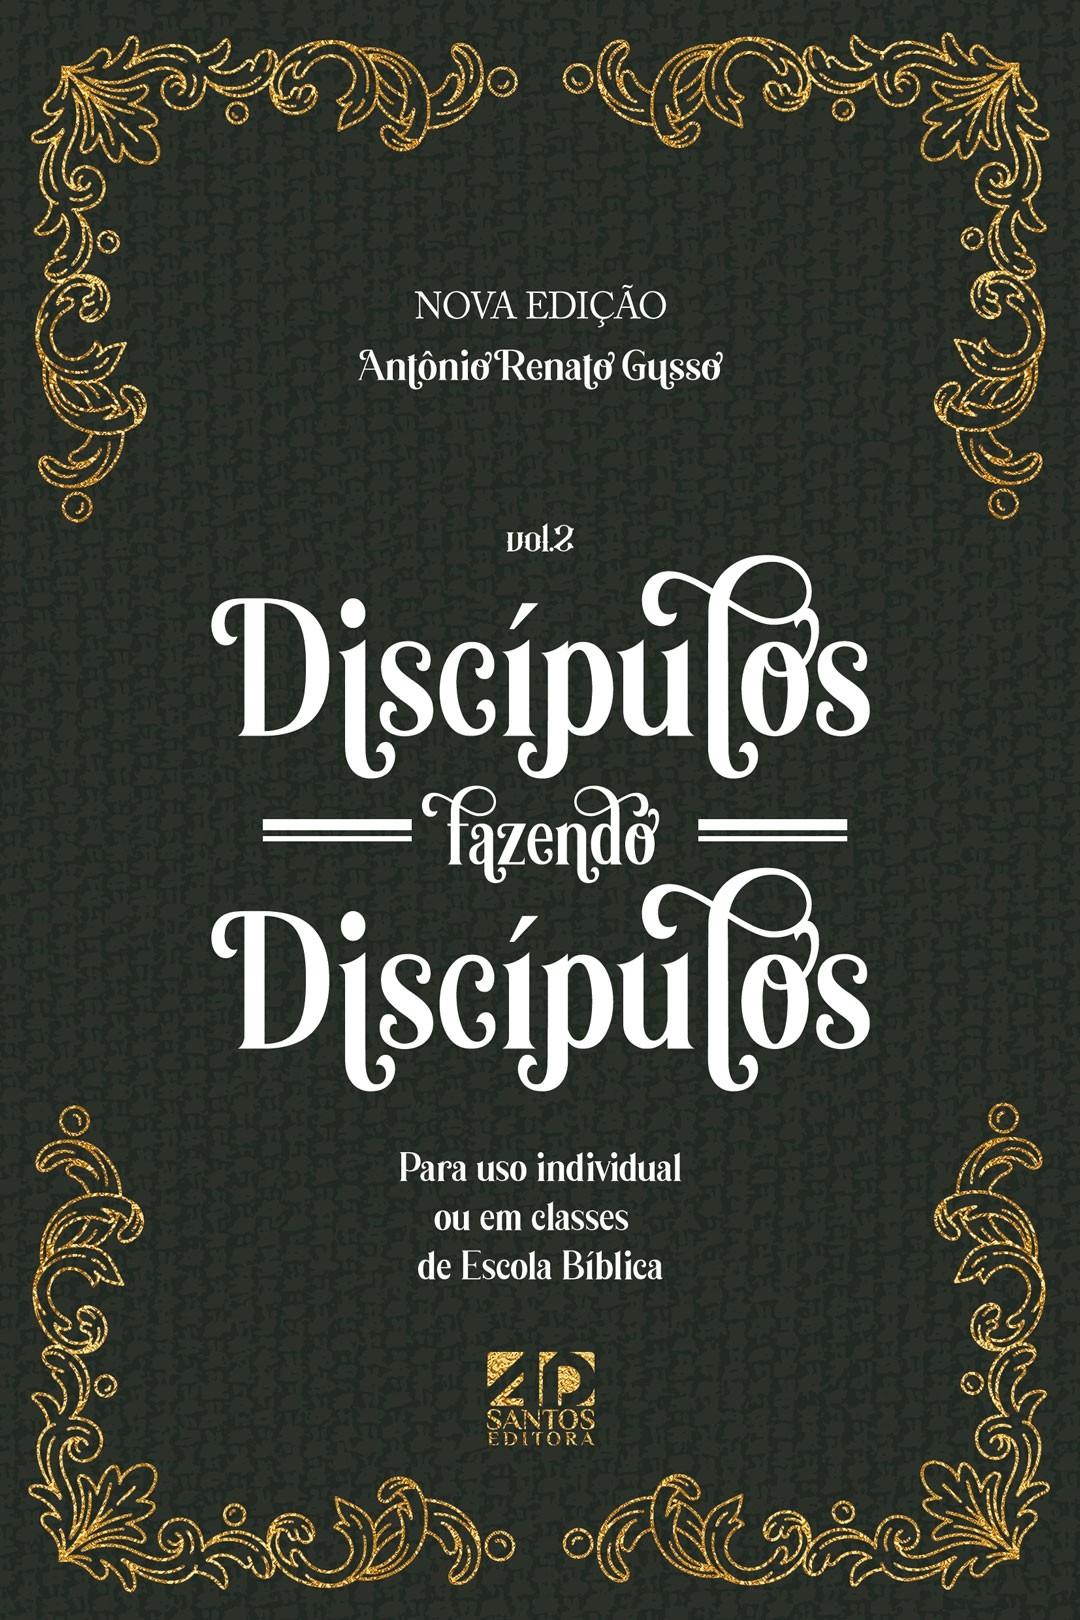 capa do livro Discipulos fazendo Discipulos volume 1